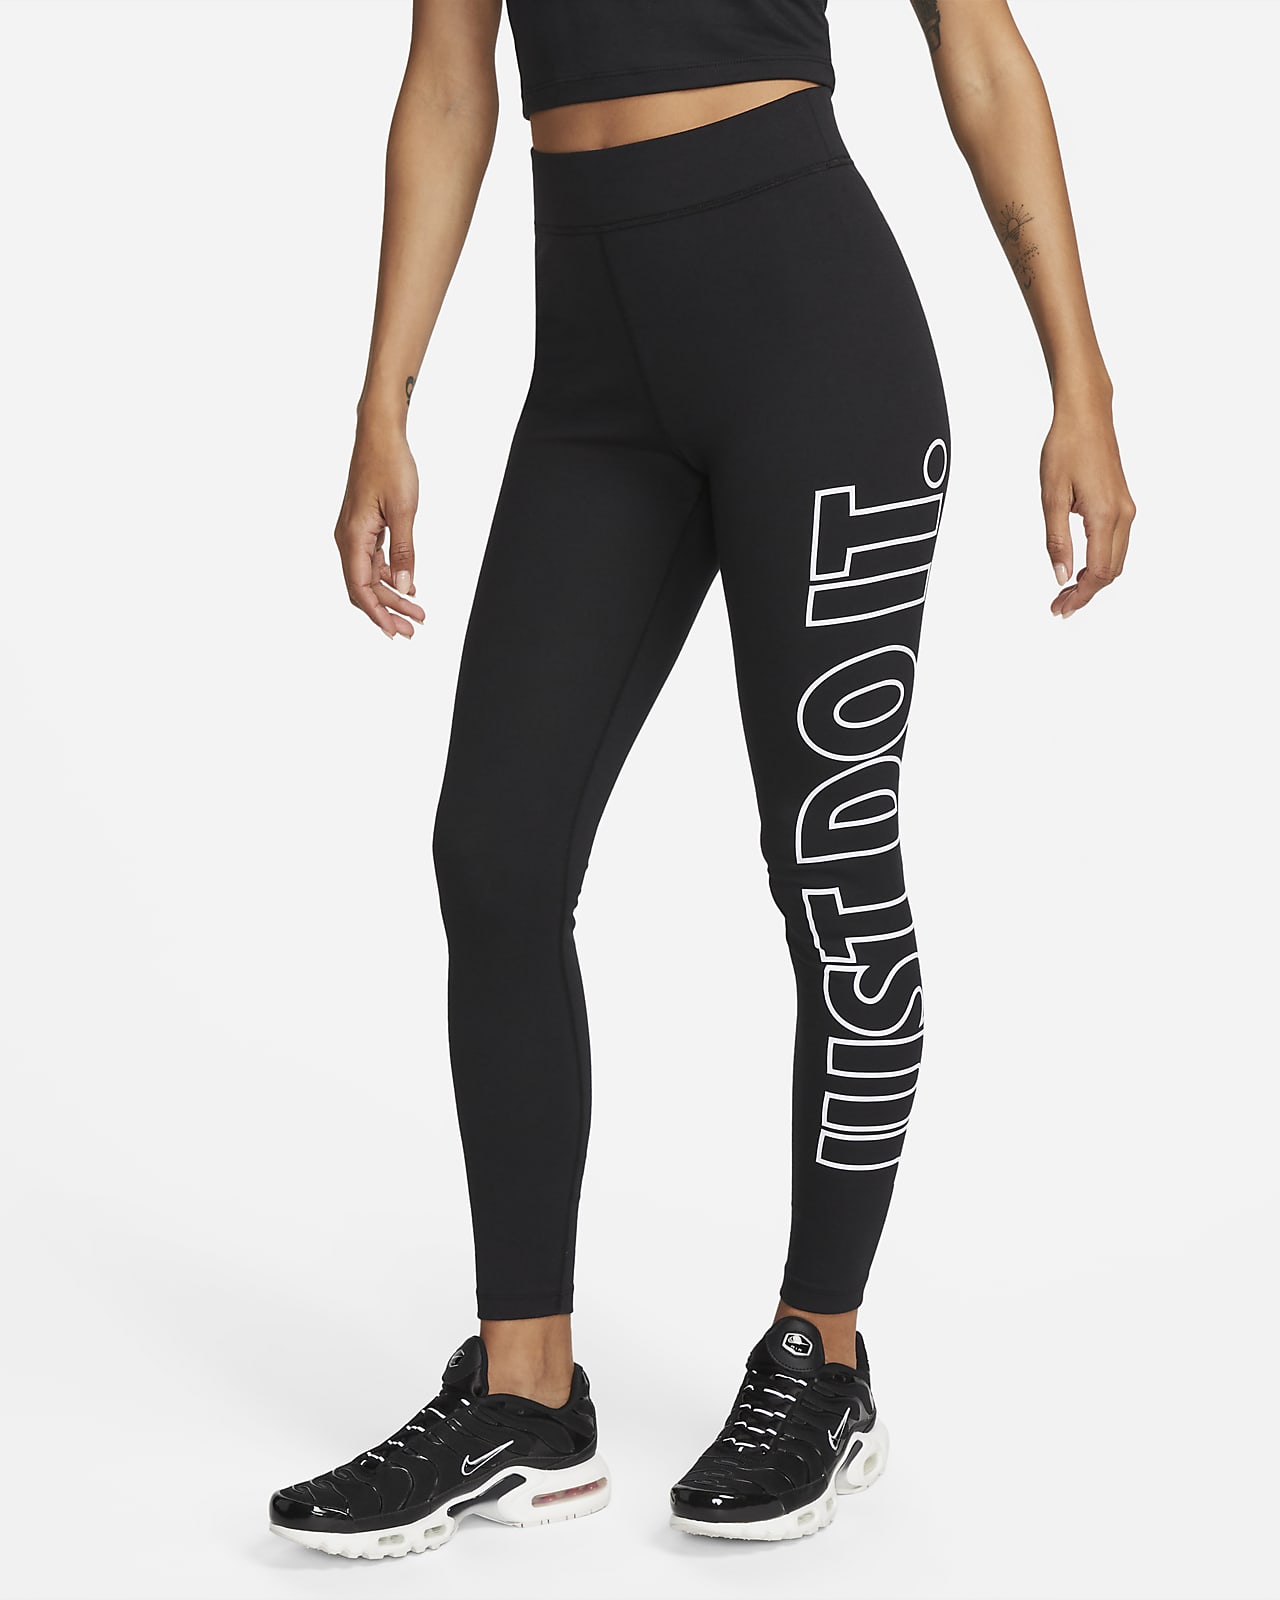 Nike Womens Sport Leggings Swoosh Sweatshirts Logo Light Stretch Fabric S M  L XL